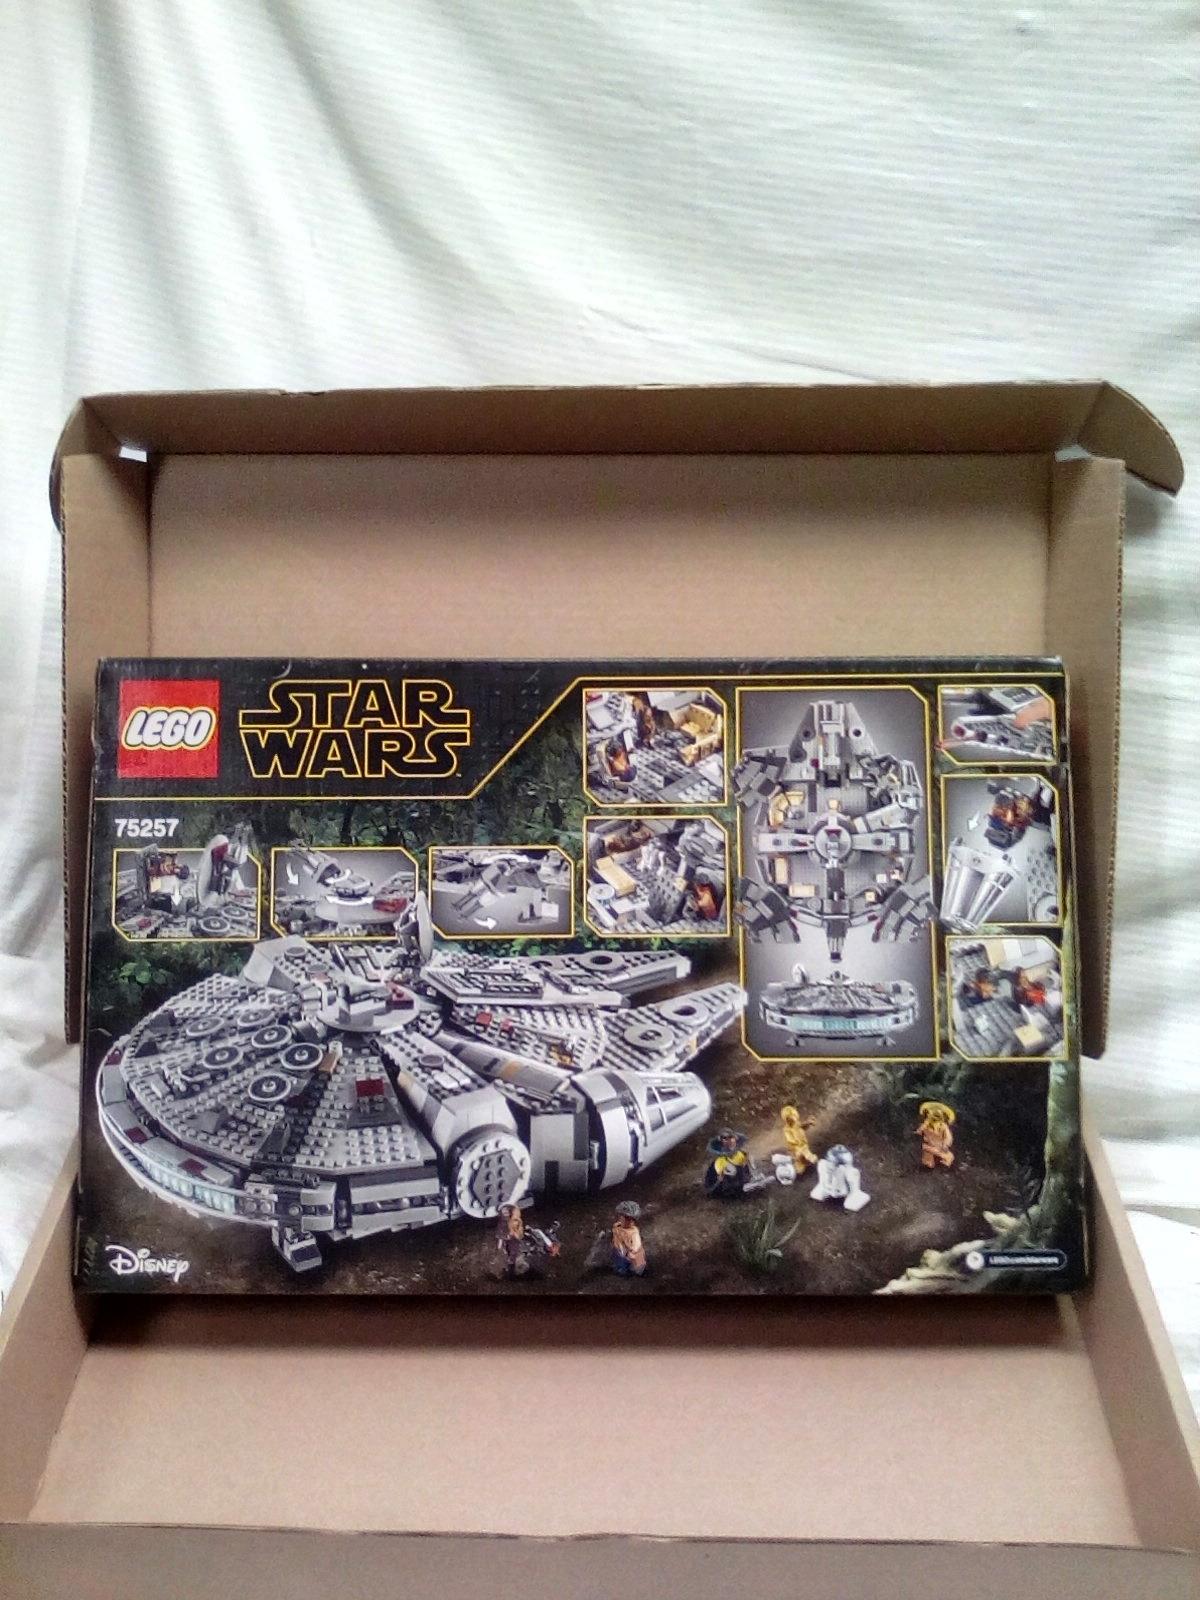 LEGO Star Wars:The Rise of Skywalker Millennium Falcon 75257 Starship